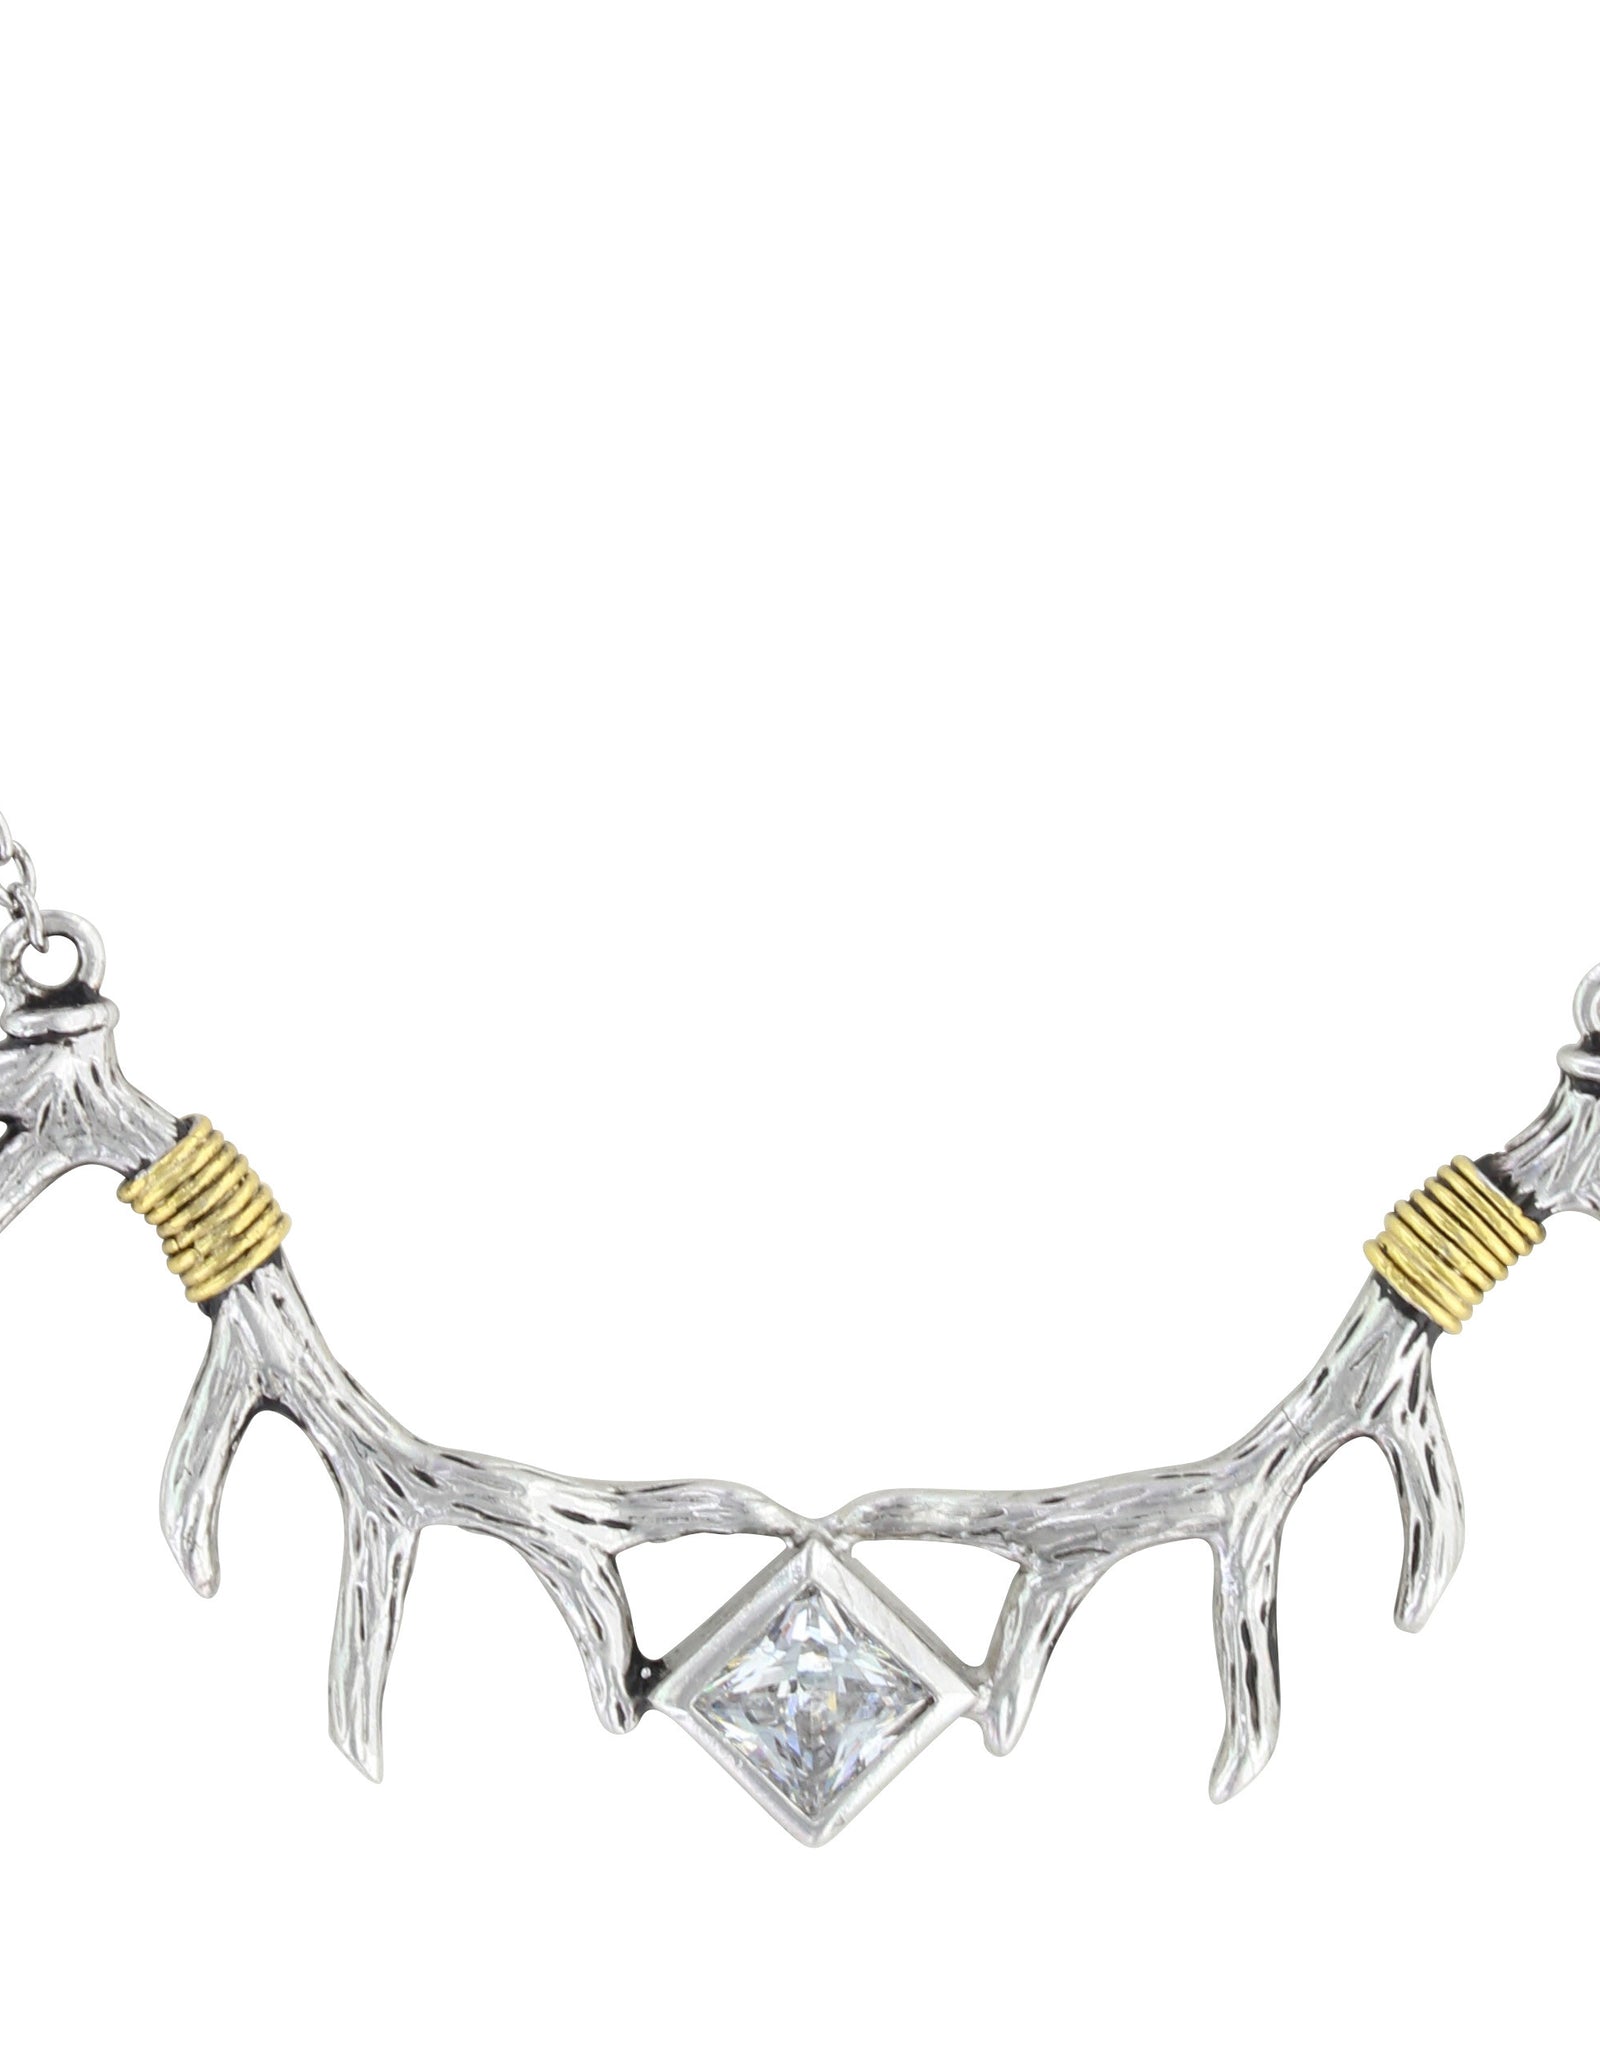 Antlers Festoon Necklace